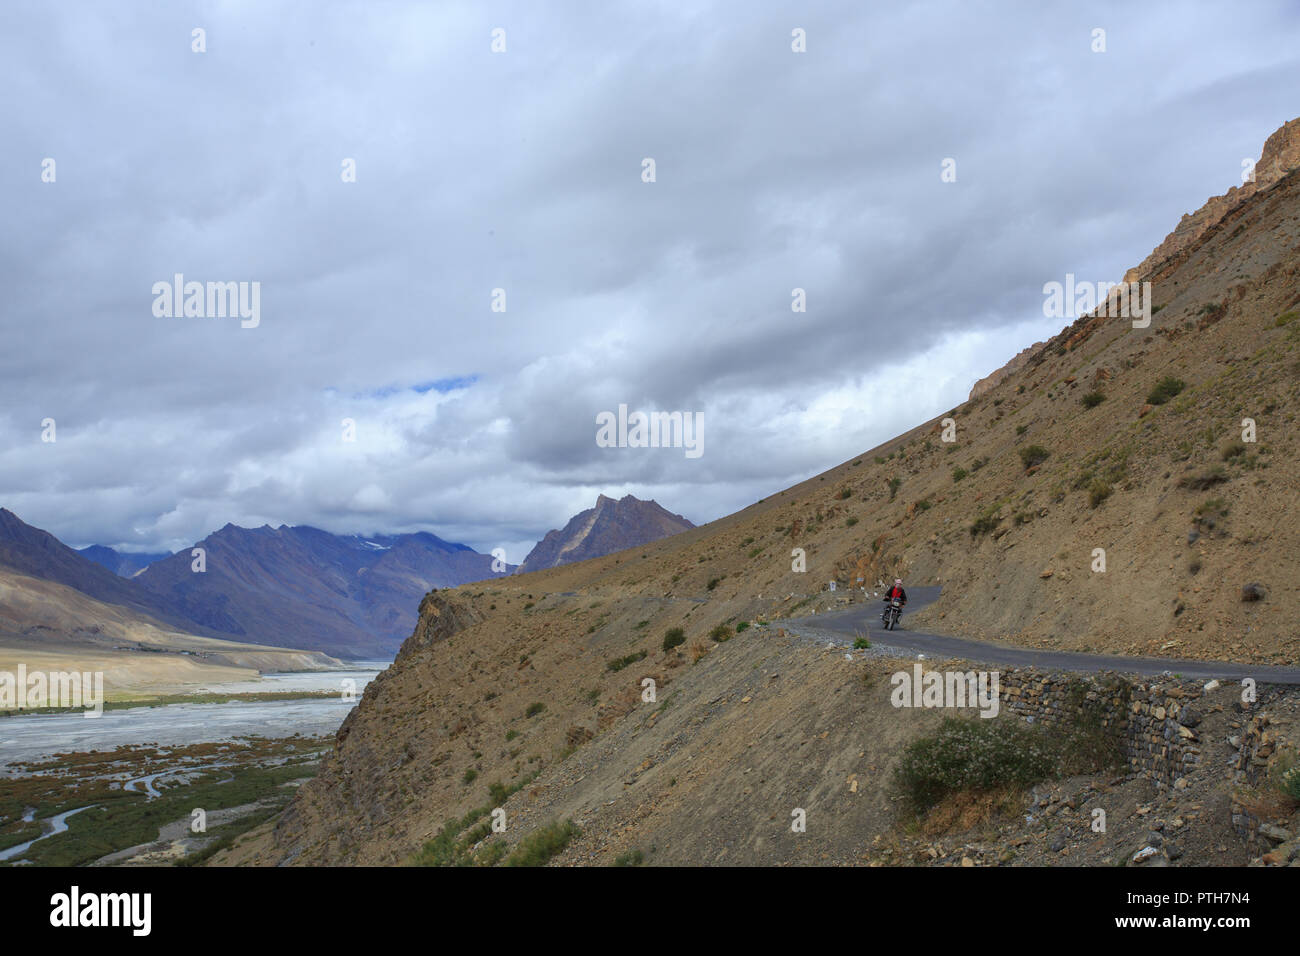 A biker riding motor bike in Spiti Valley, India Stock Photo